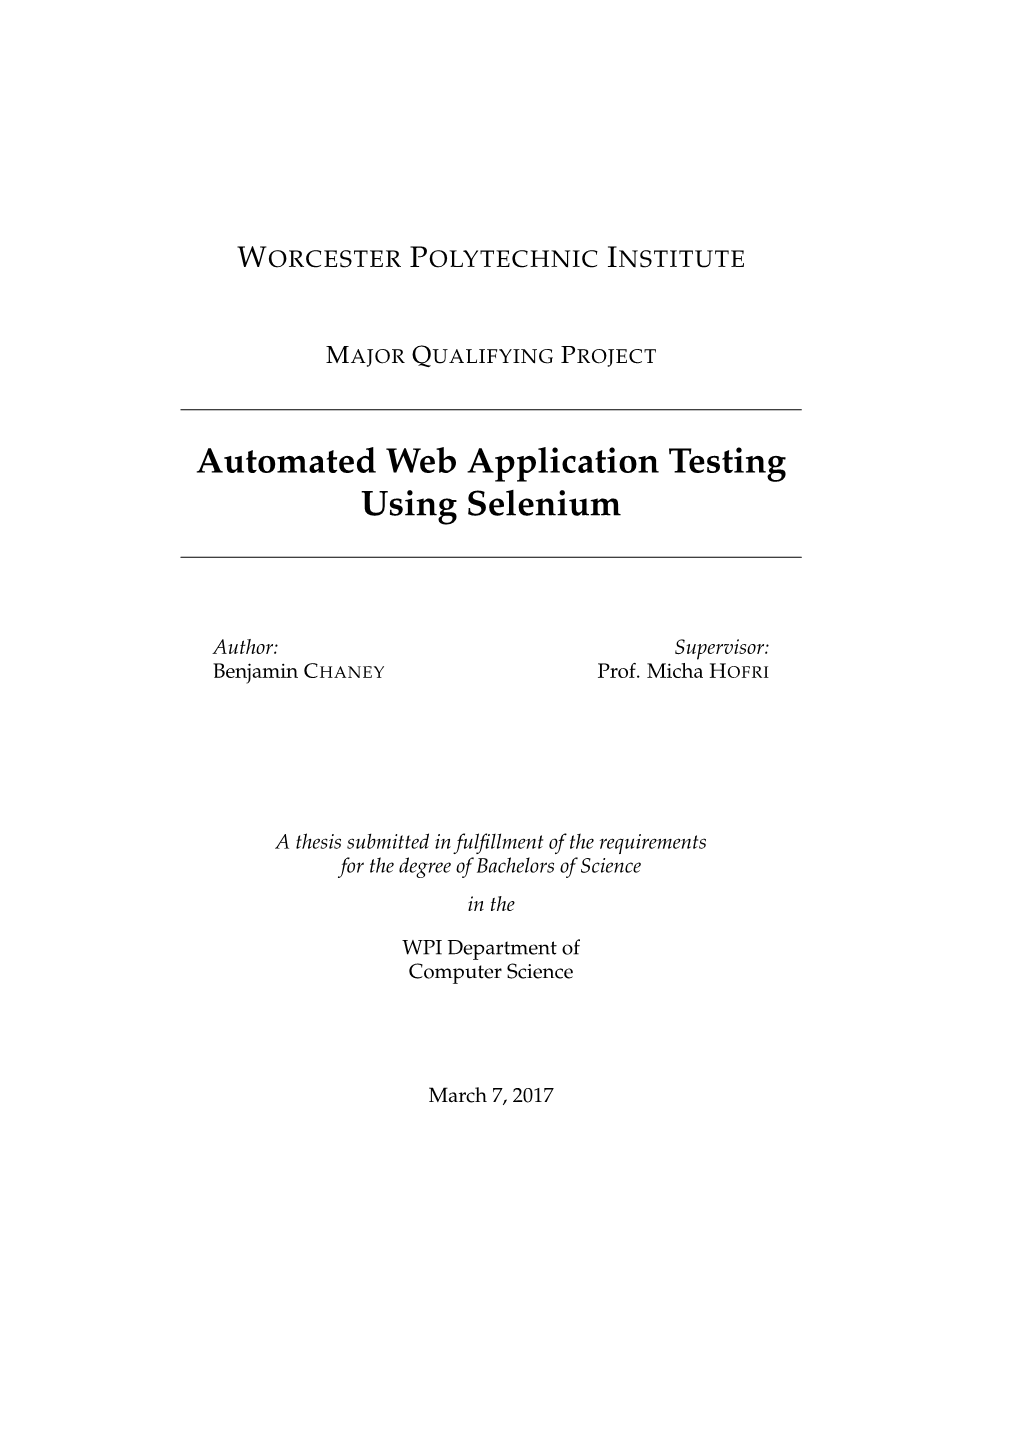 Automated Web Application Testing Using Selenium